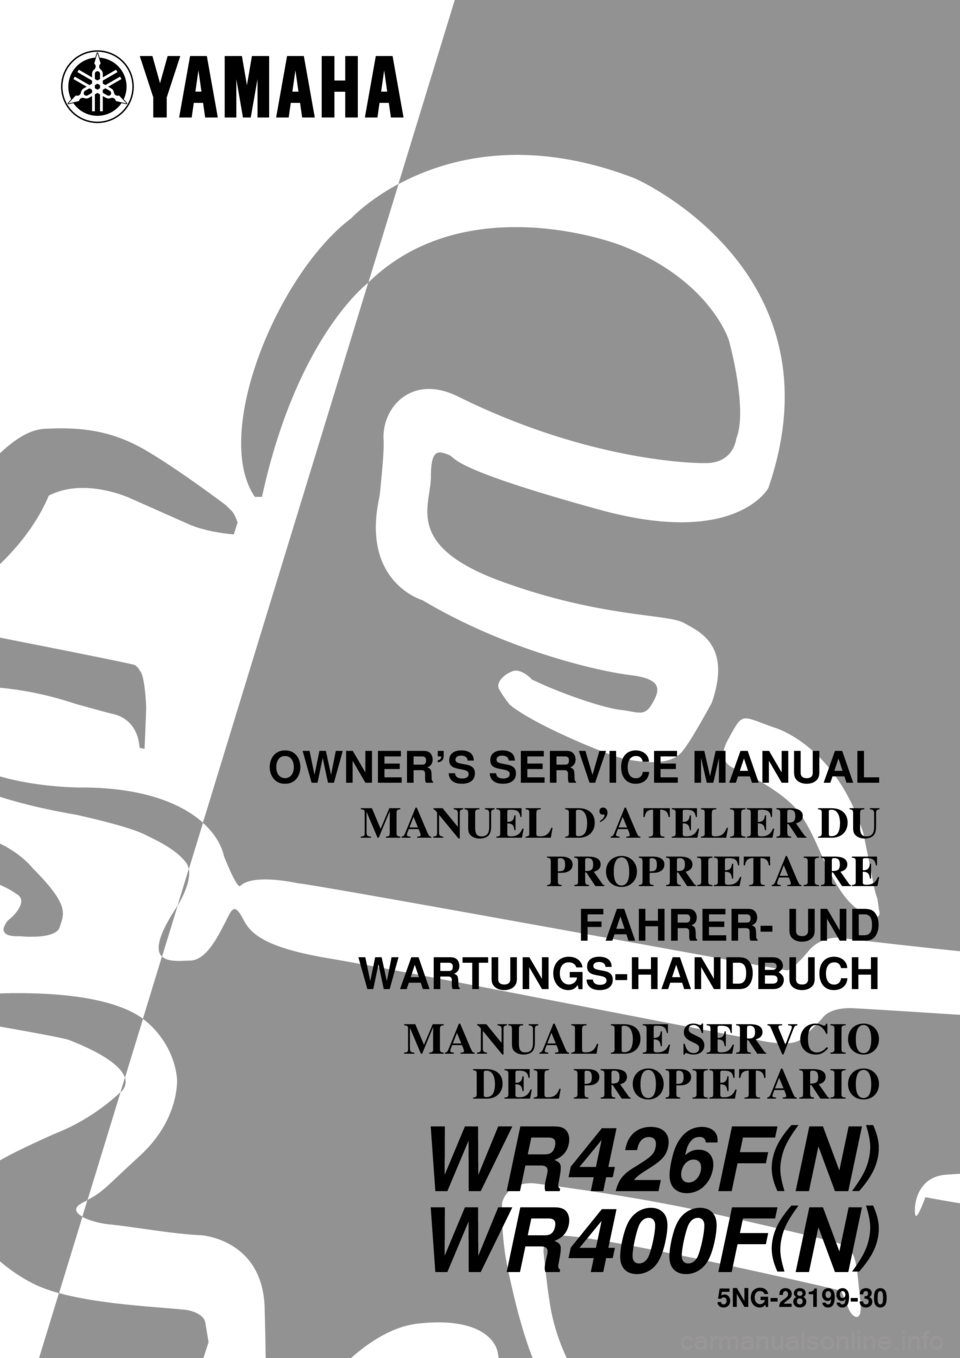 YAMAHA WR 426F 2001  Owners Manual      
 
 
 
5NG-28199-30
WR426F(N)
WR400F(N)
OWNER’S SERVICE MANUAL
MANUEL D’ATELIER DU
PROPRIETAIRE
FAHRER- UND
WARTUNGS-HANDBUCH
MANUAL DE SERVCIO
DEL PROPIETARIO 